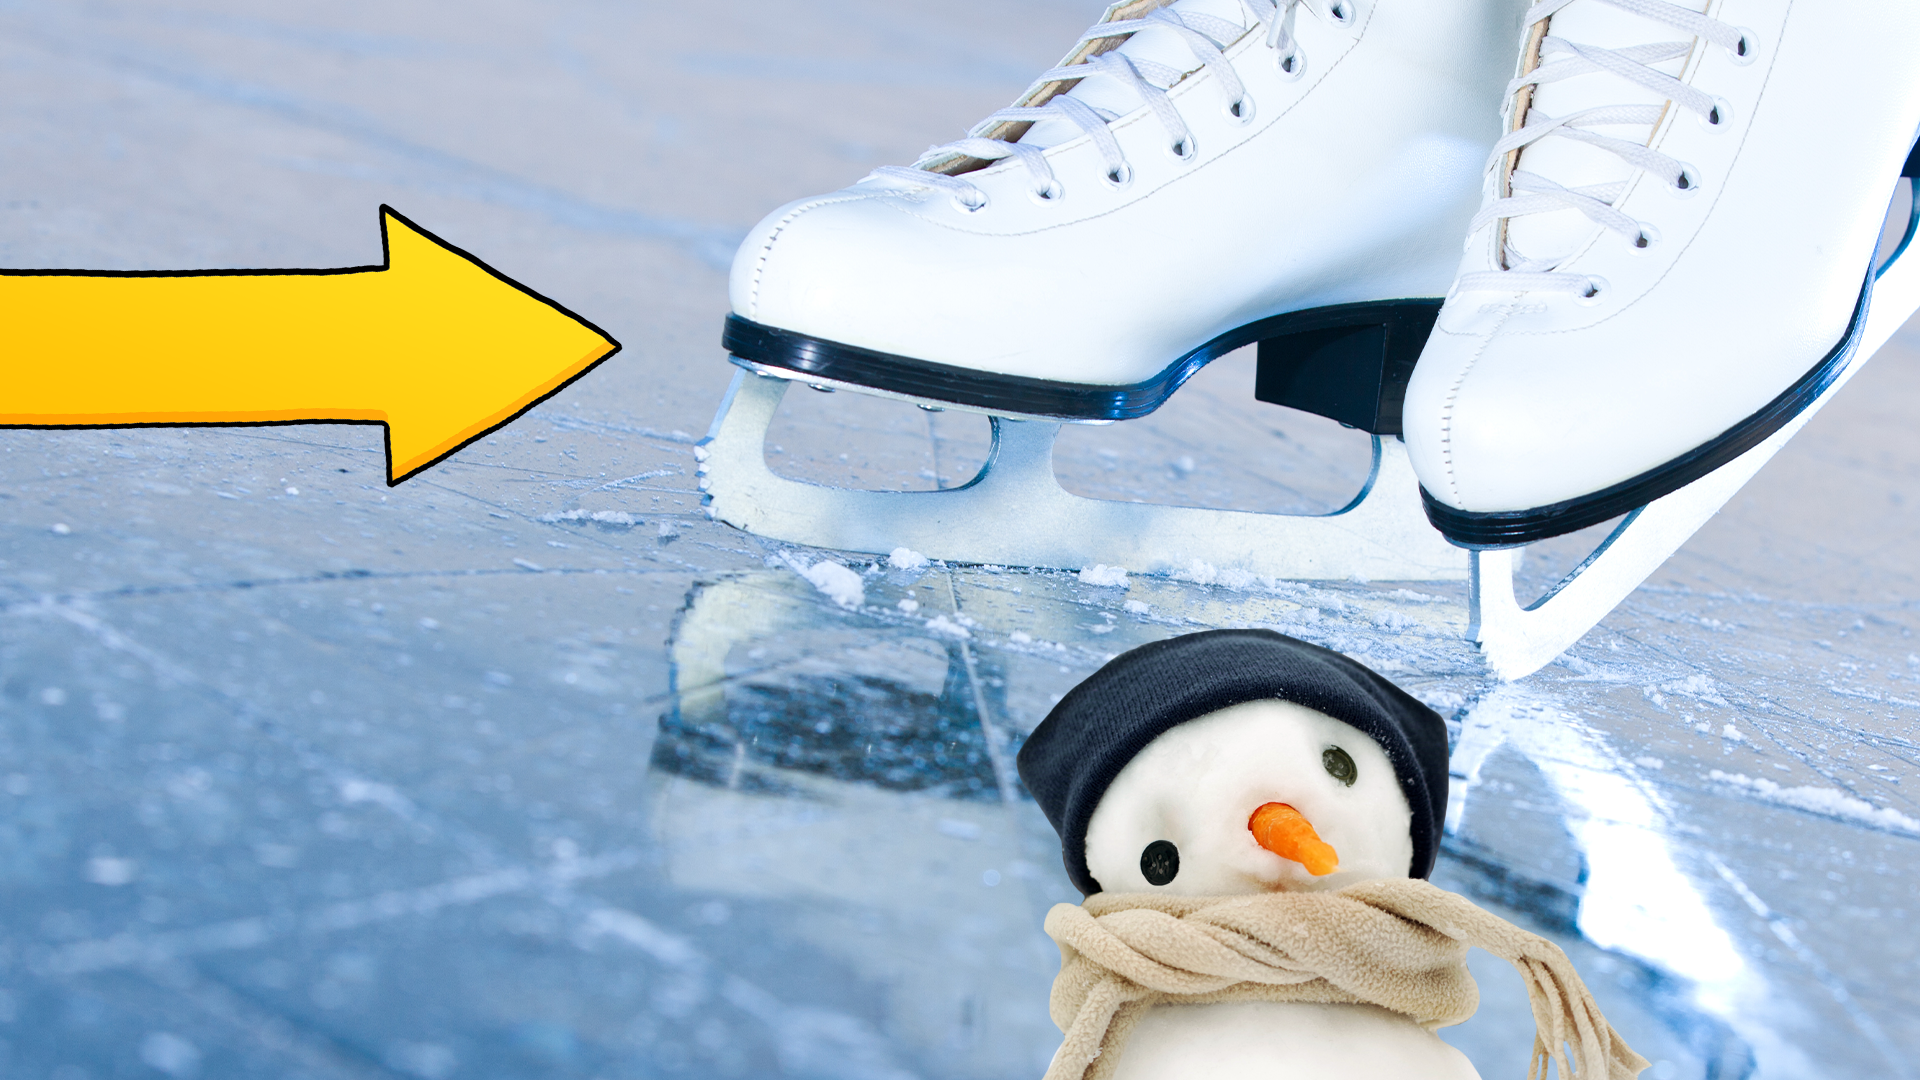 Figure skates on ice with Beano arrow and snowman